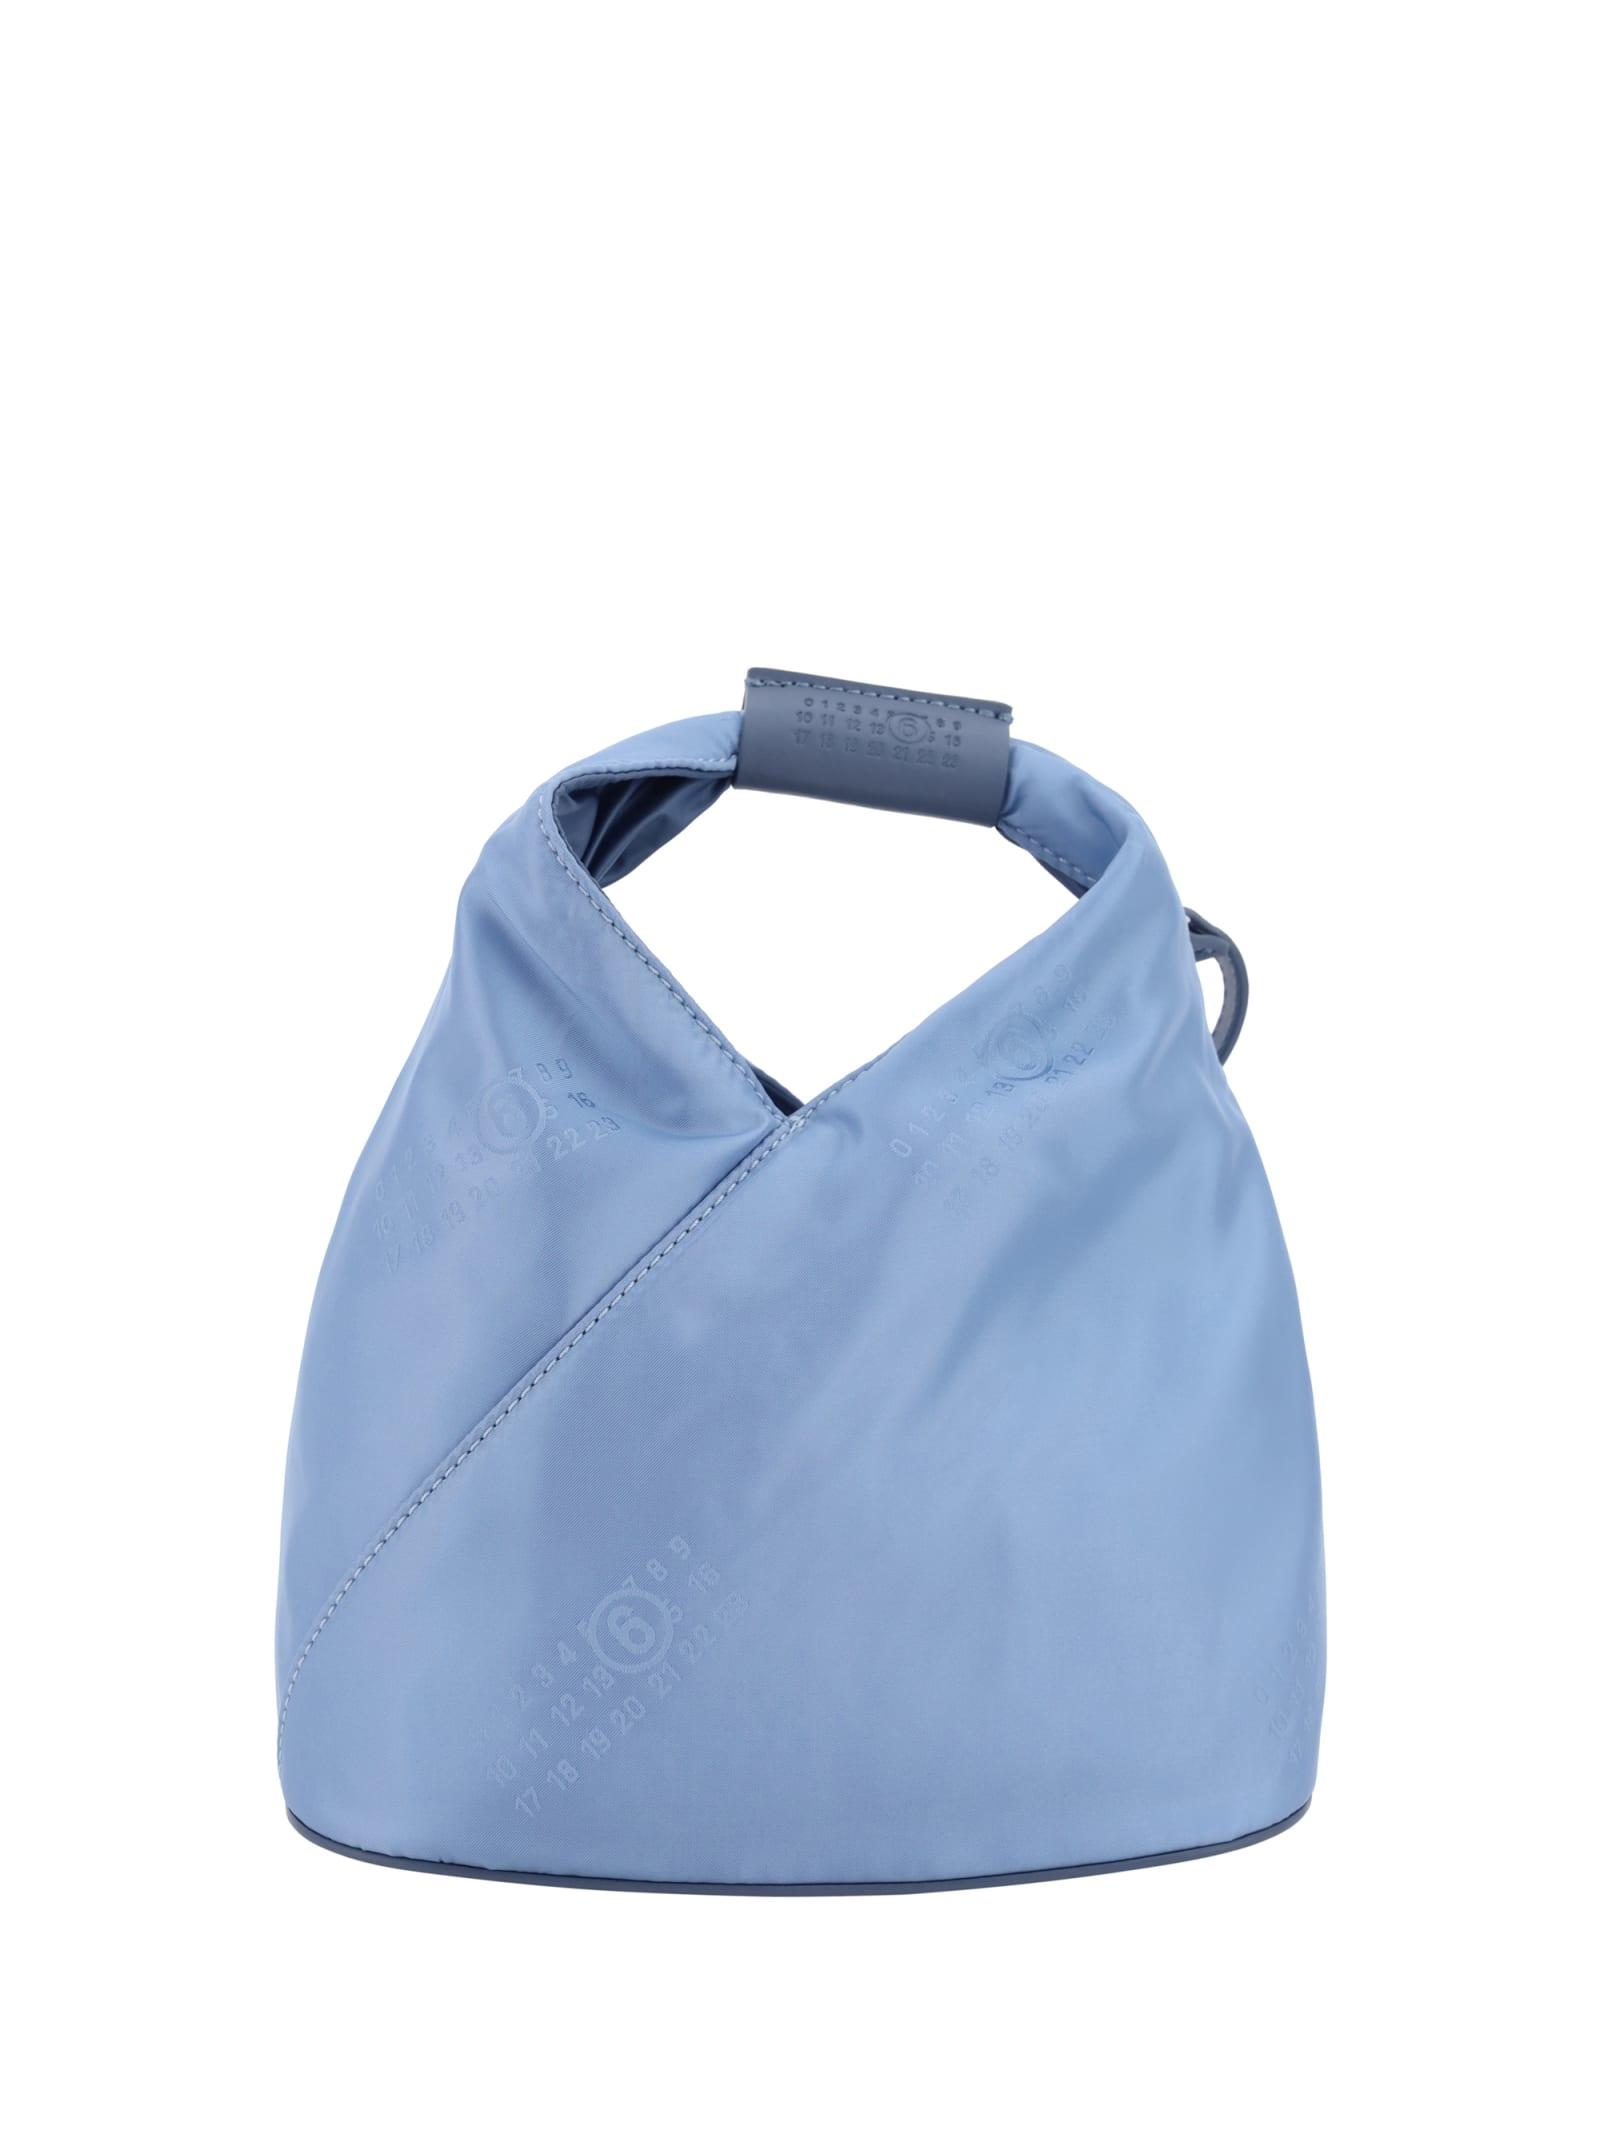 MM6 by Maison Martin Margiela Japanese Handbag in Blue | Lyst